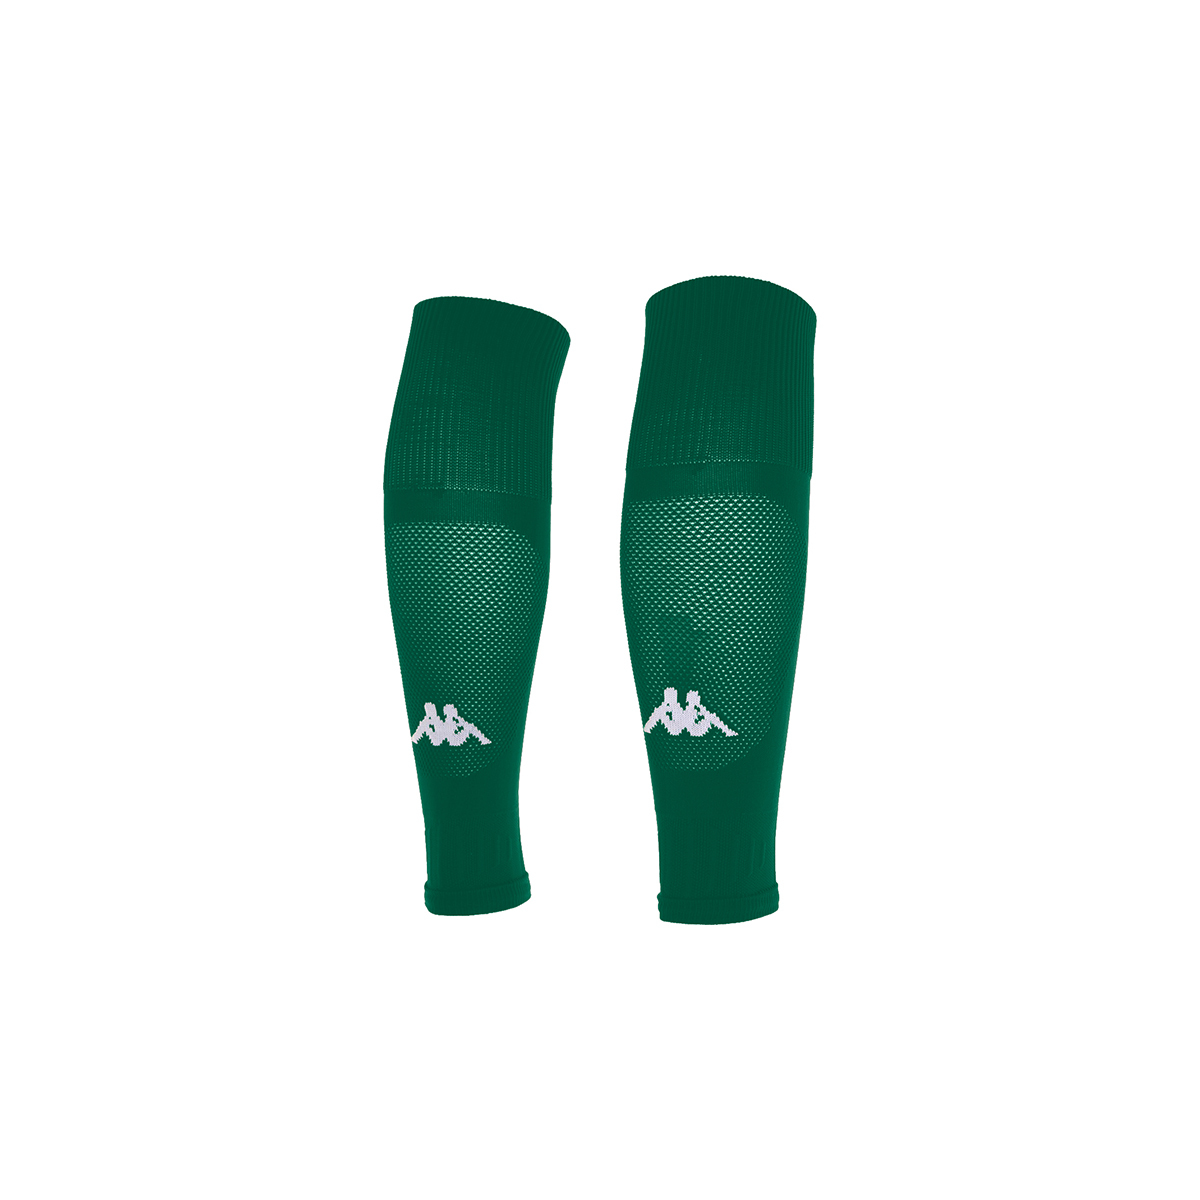 Medias de Fútbol sin Pie Umbro Footless Socks Green